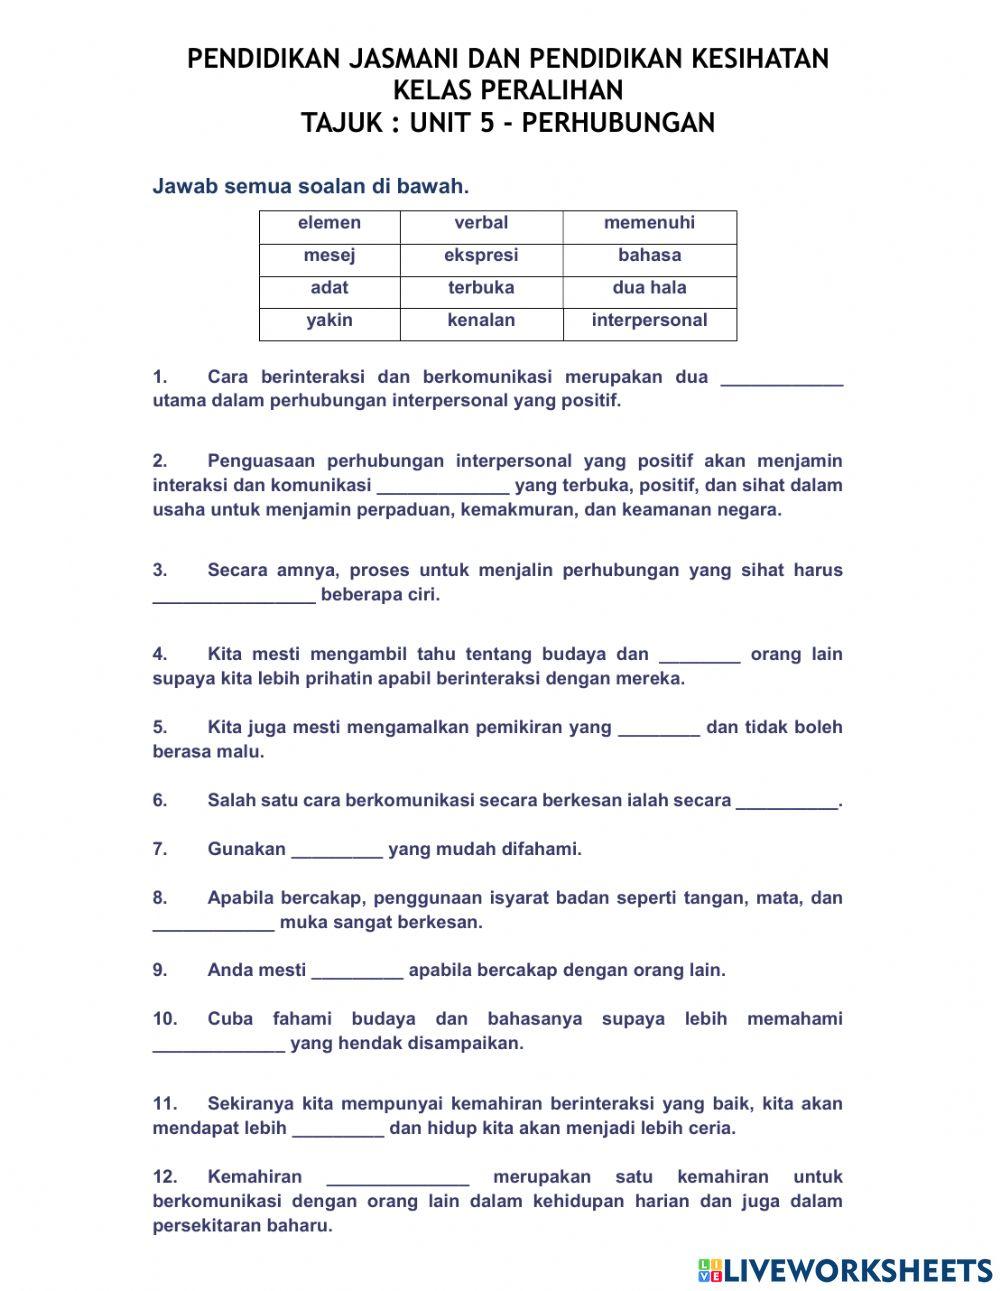 Pjpk peralihan - latihan unit 5 (perhubungan)